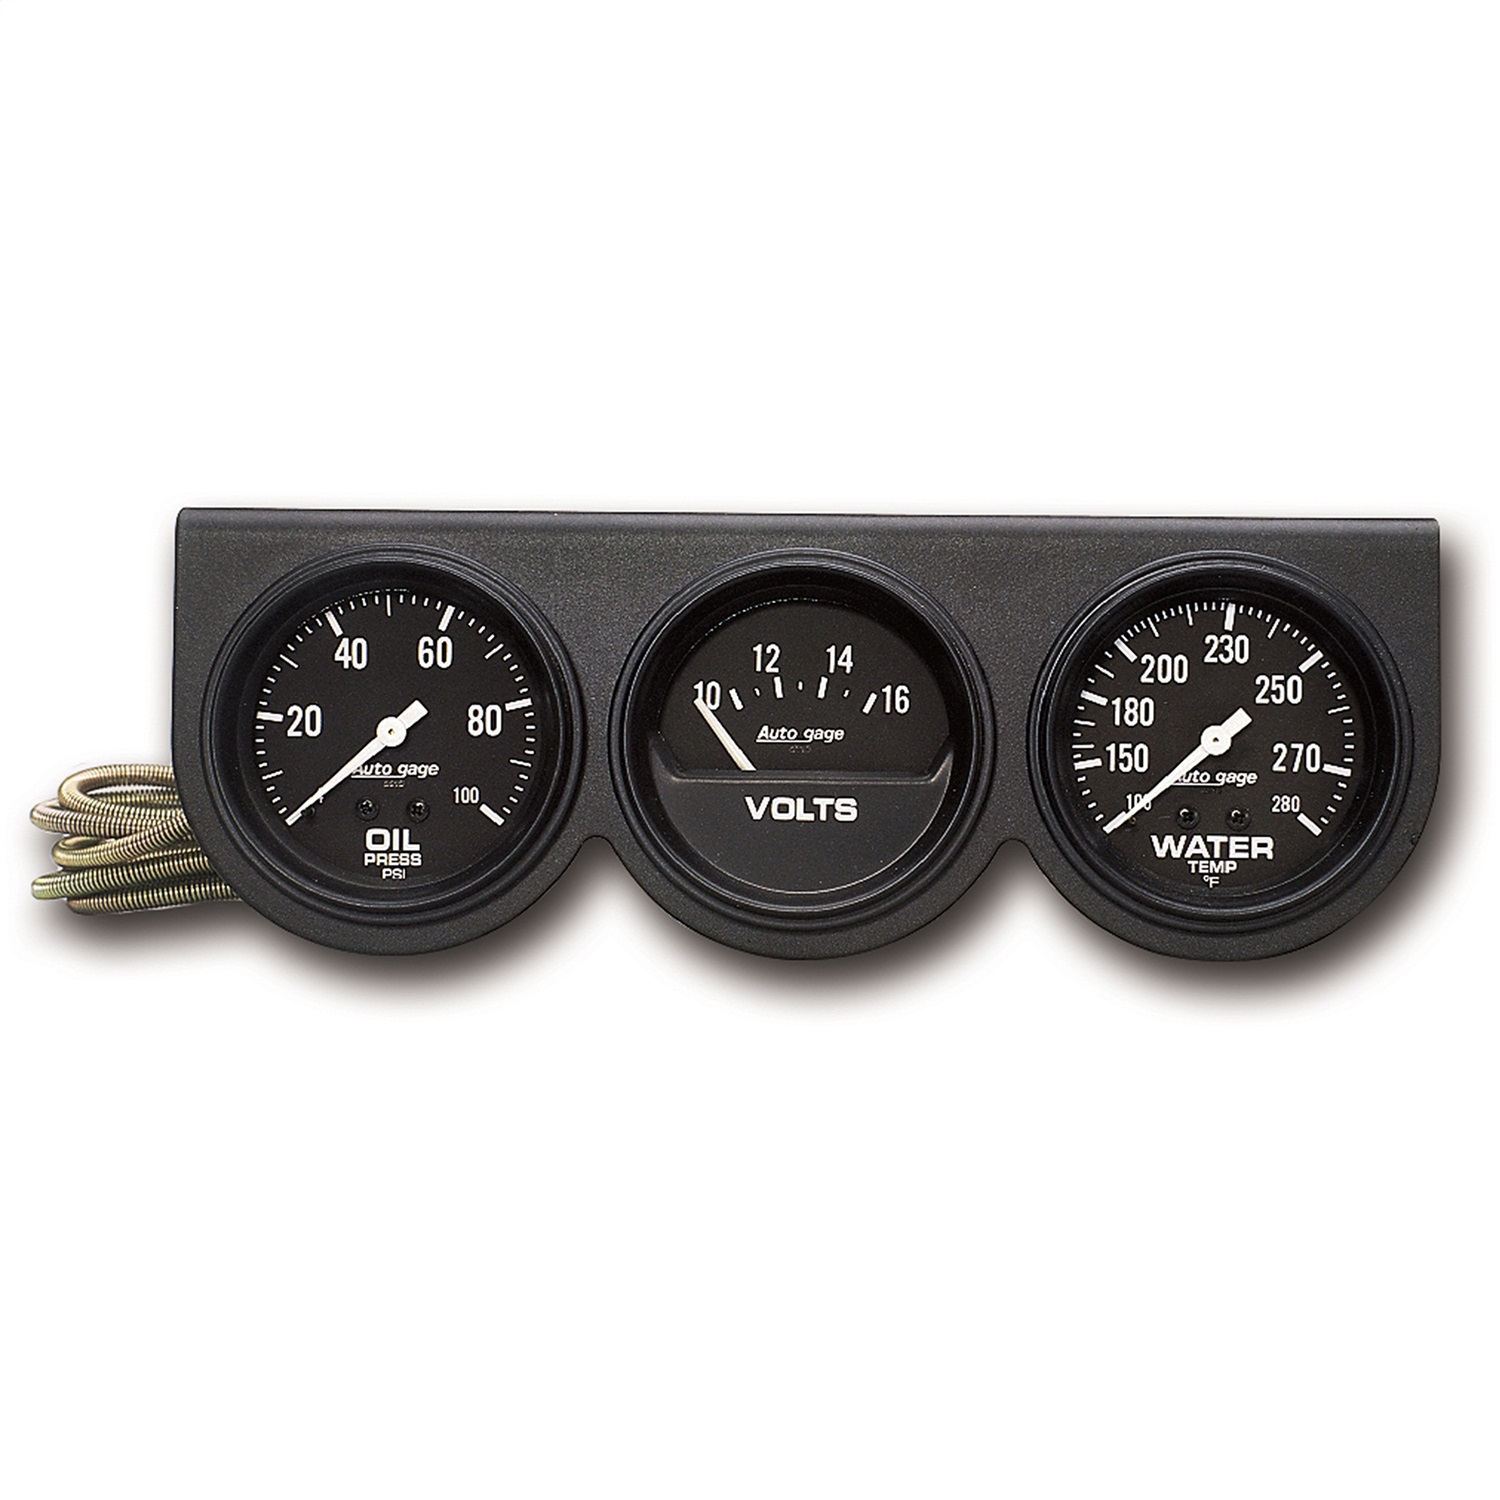 Auto Meter Auto Meter 2398 Autogage; Black Oil/Volt/Water; Black Console